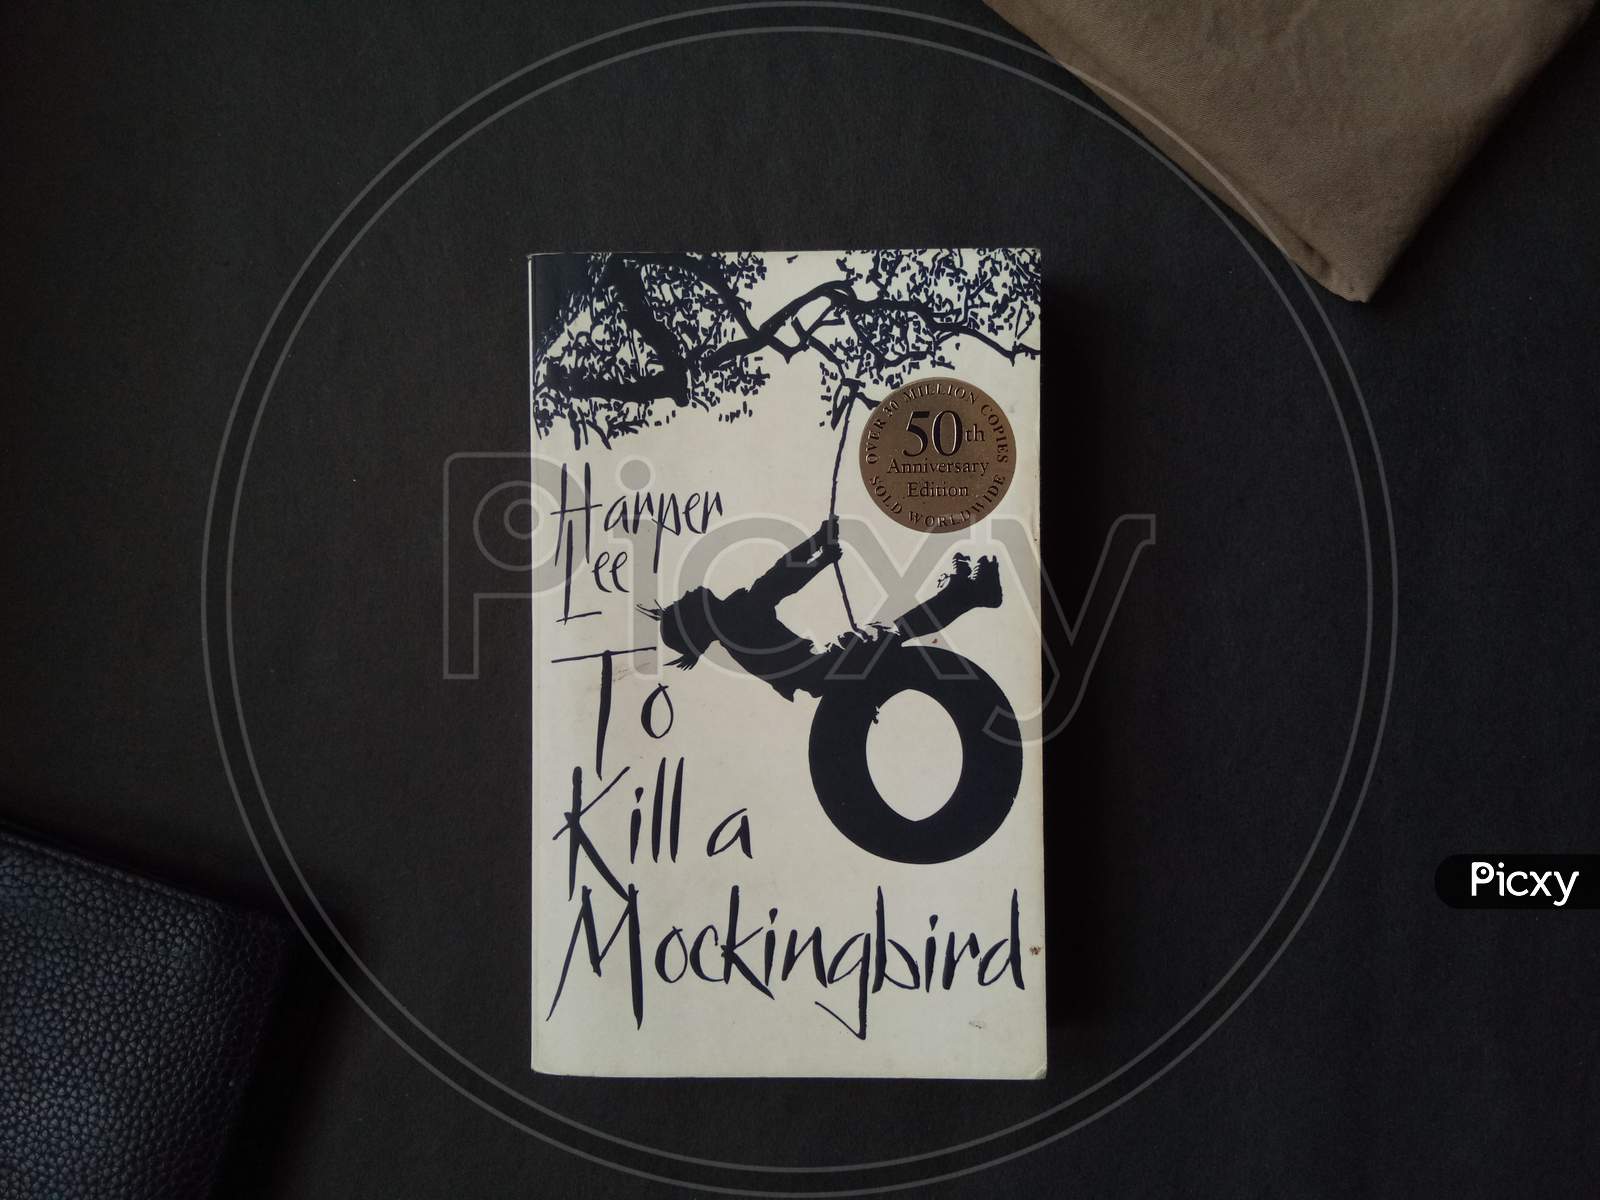 To kill a mockingbird by harper lee. Bestseller novel book. Calicut, Kerala, India; Oct 4, 2020.